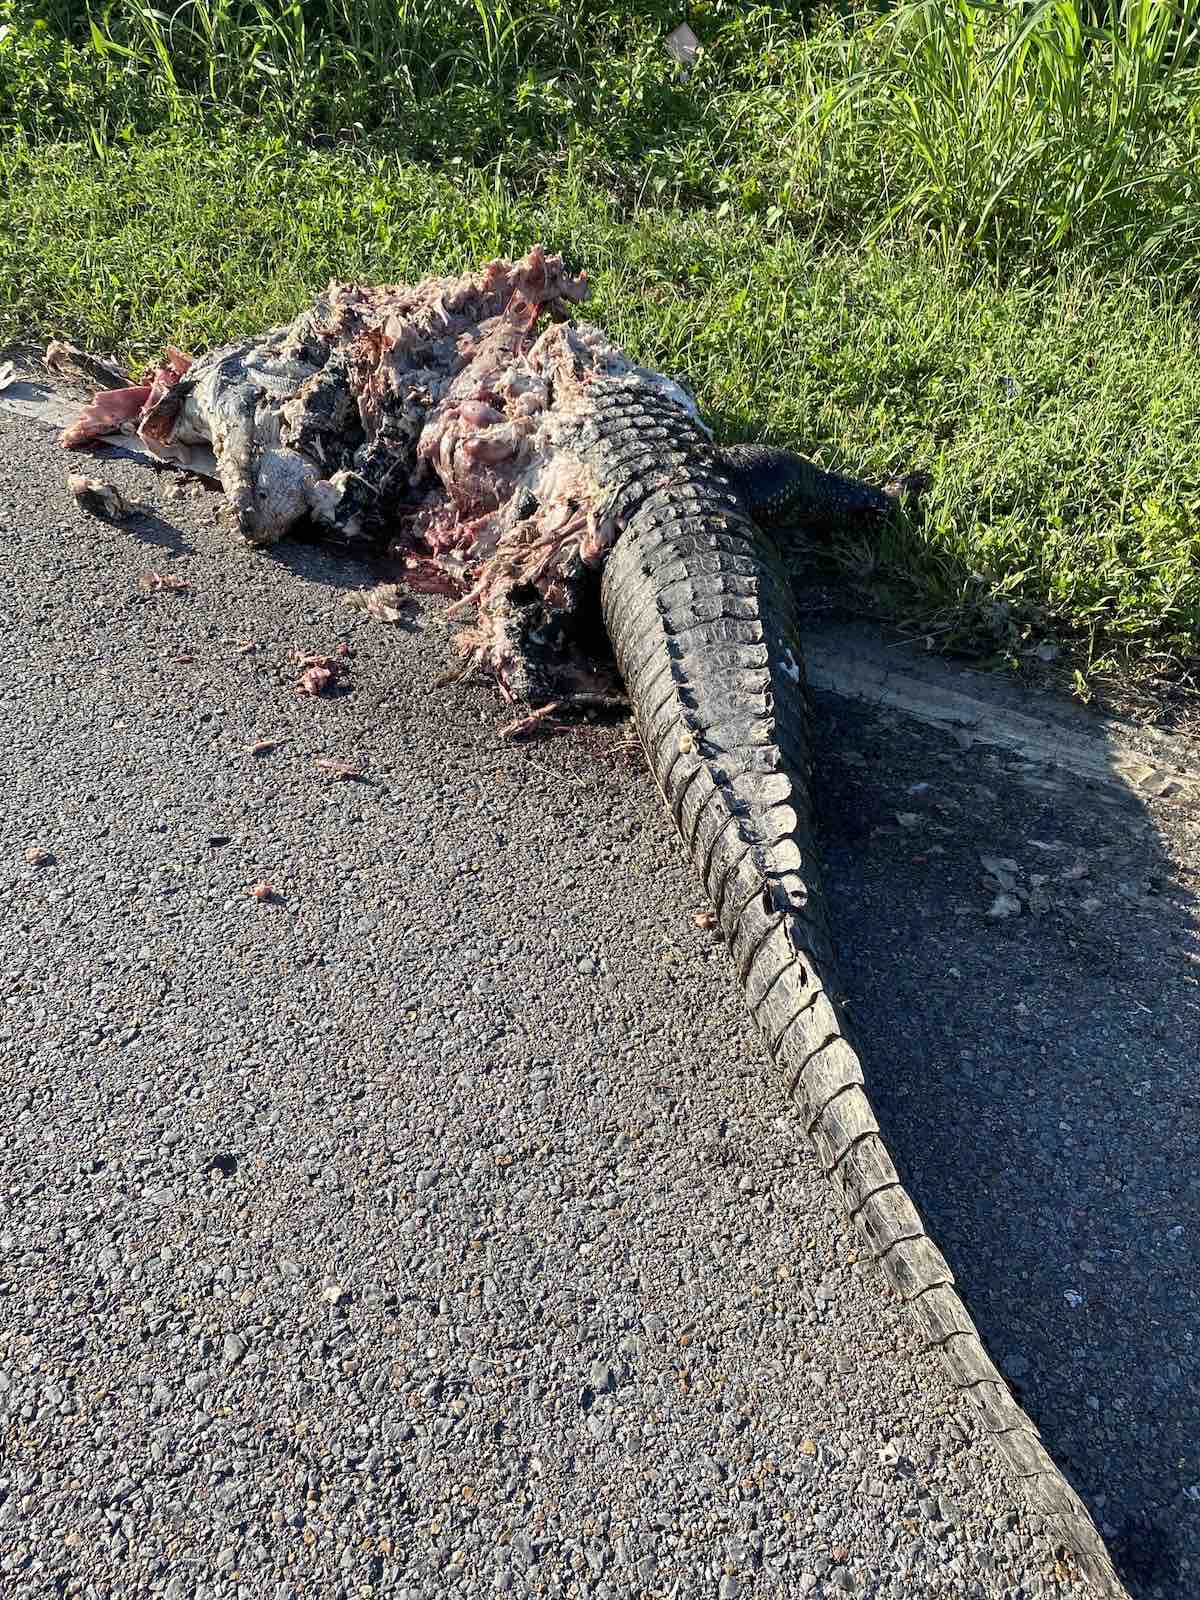 Alligator roadkill along the Gulf of Mexico Coast